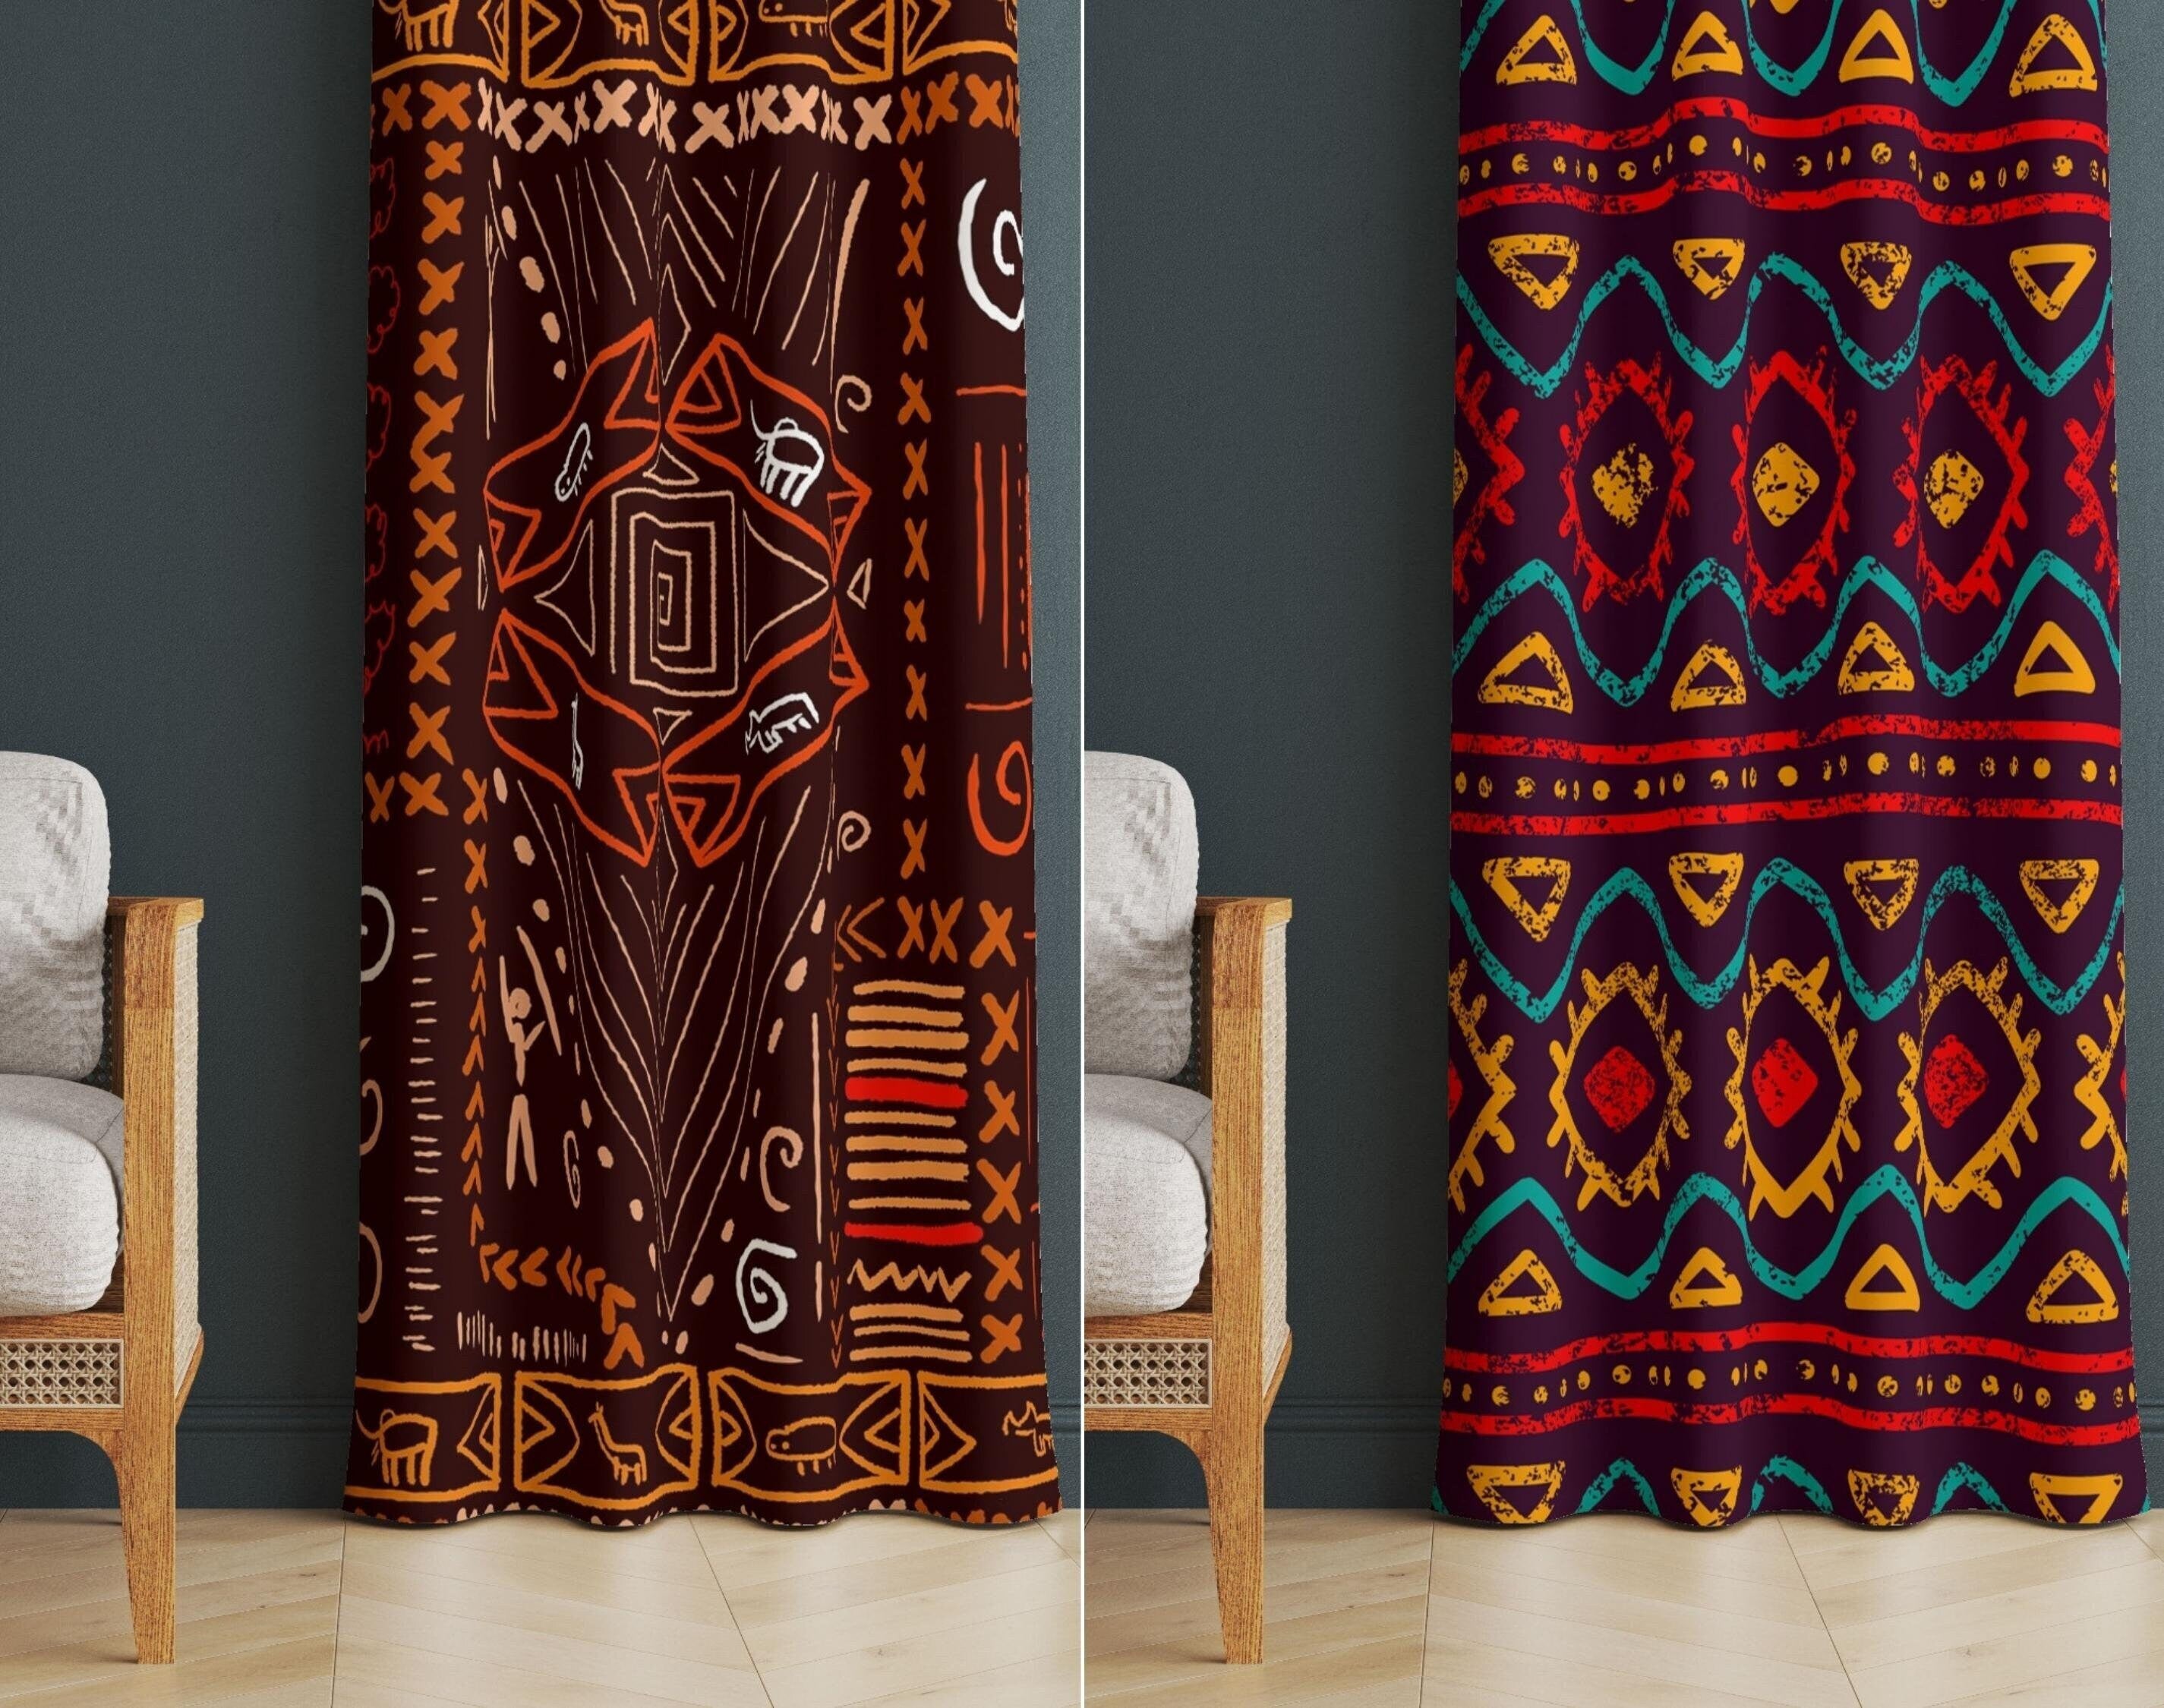 Aboriginal Design Curtain, Tribal Motifs Drapes, Boho Window Coverings for Living Room, Bohemian Decorative Curtain, Chic Housewarming Gifts